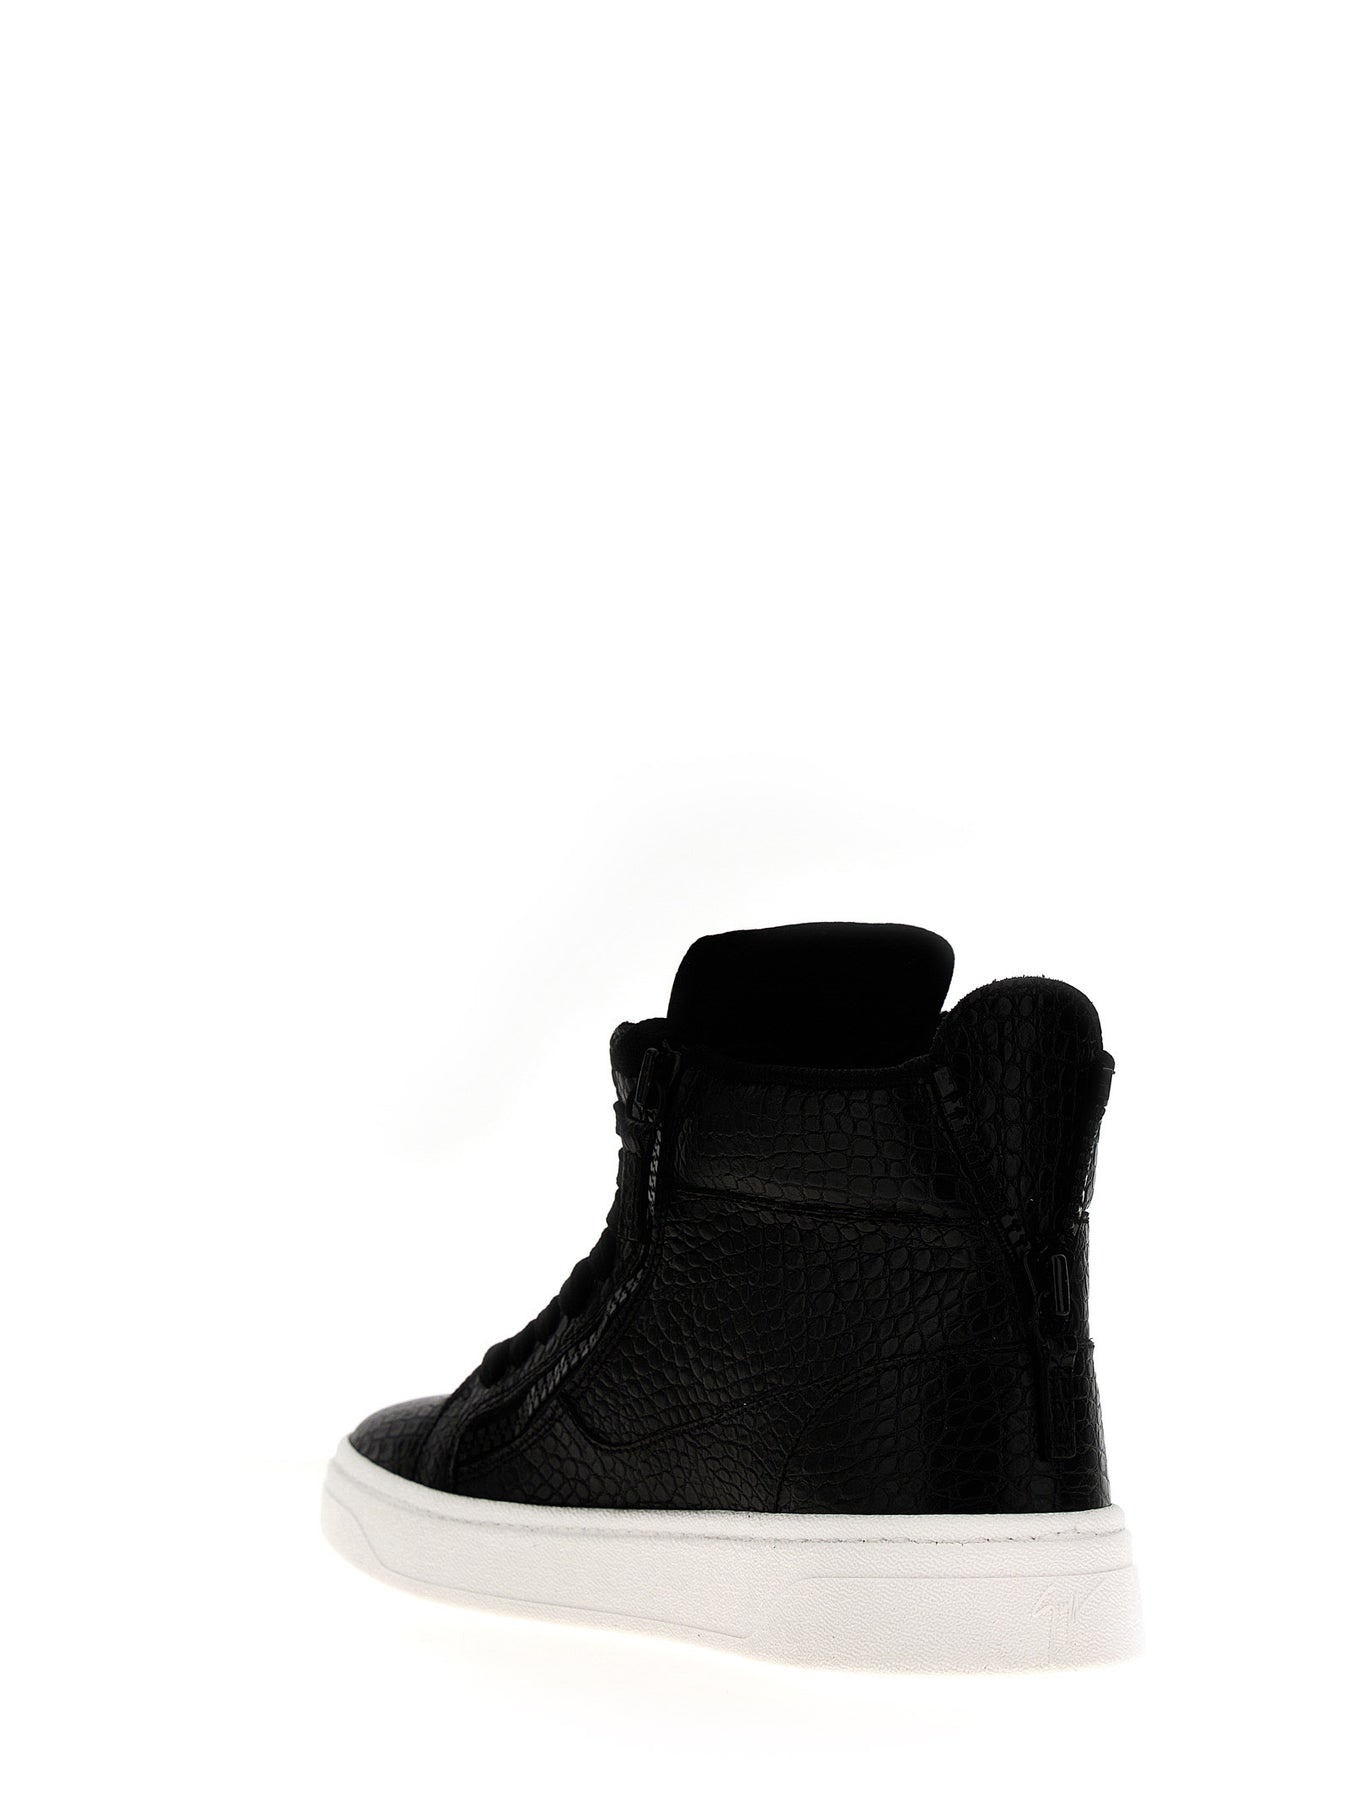 Gz/94 Sneakers White/Black - 2